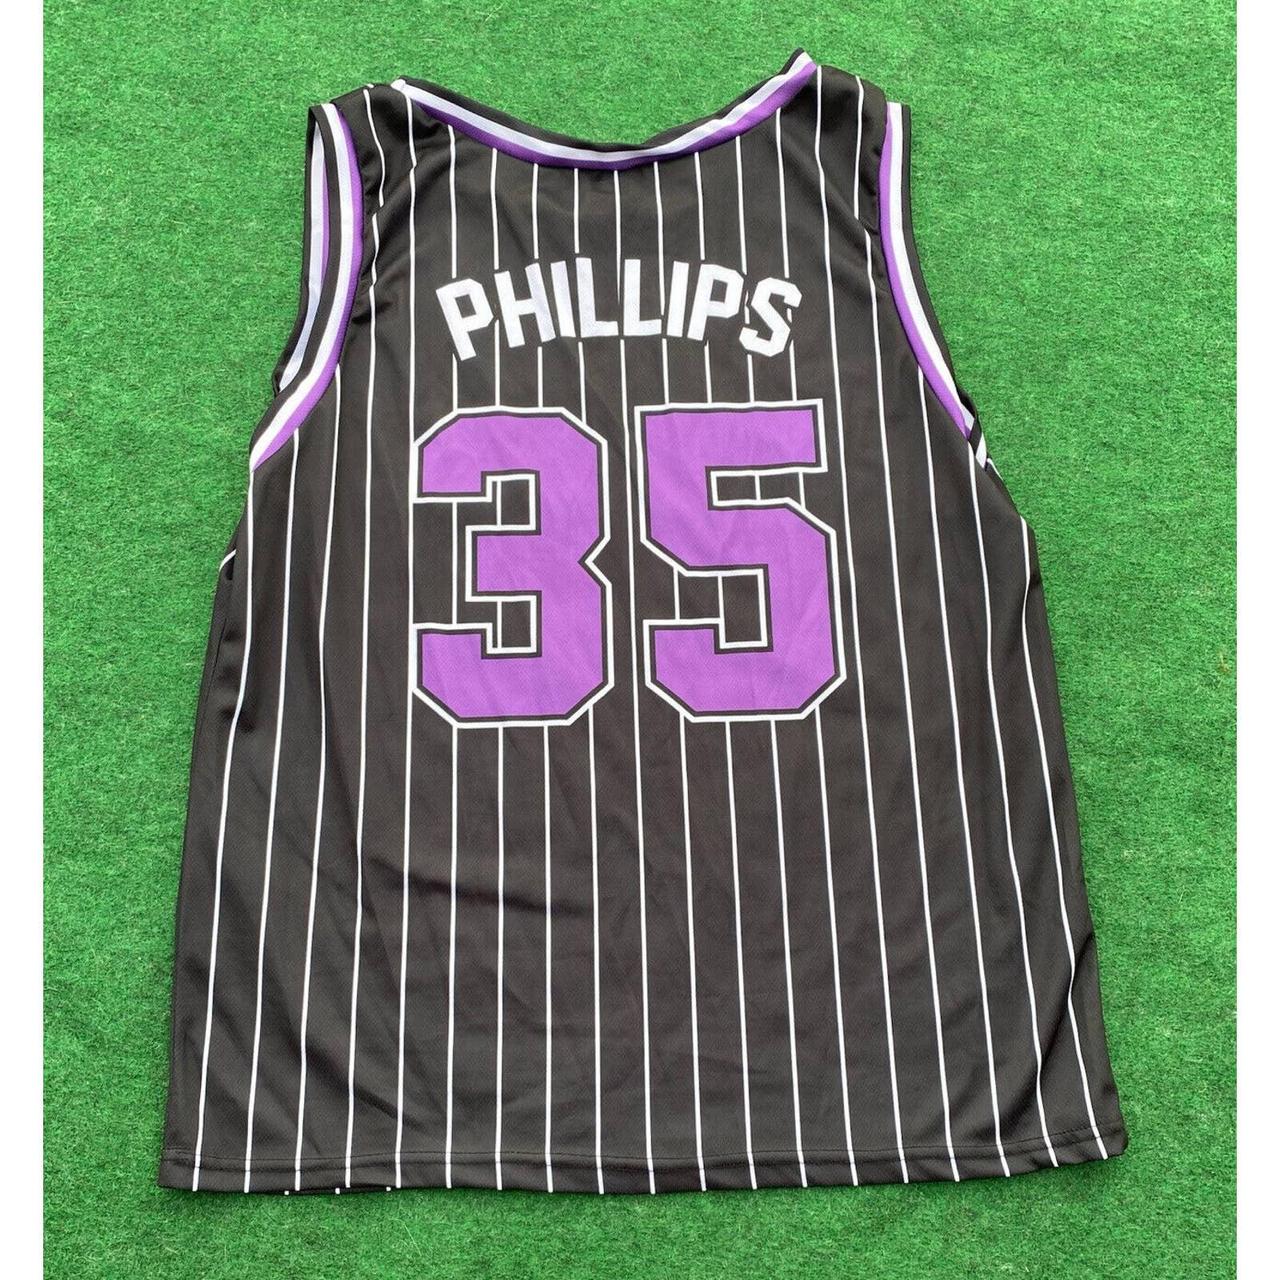 NEW Tampa Bay Devil Rays Brett Phillips New Basketball Jersey Size XL